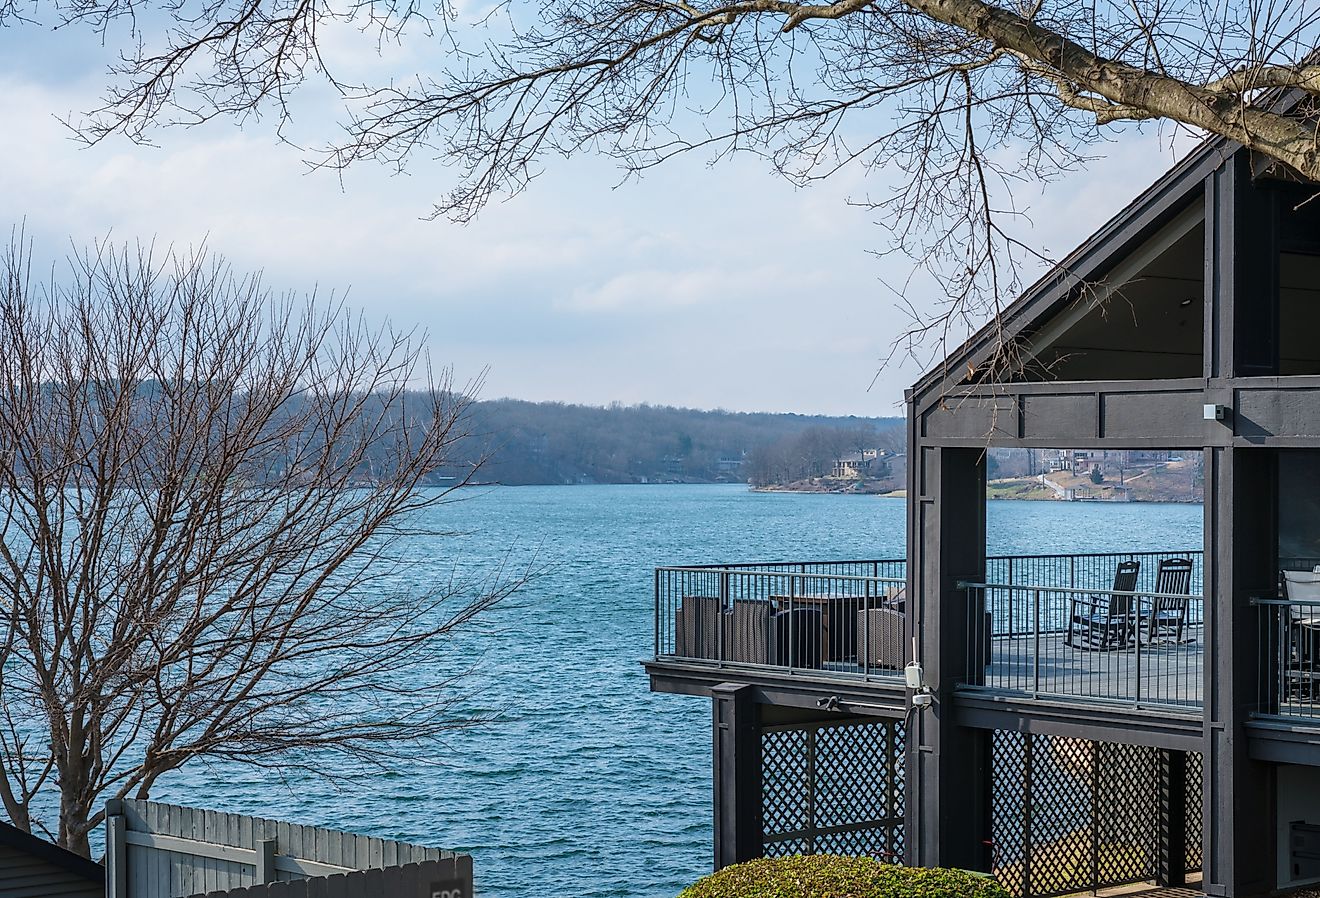 House on the lake in Northwest Arkansas, beautiful landscape view in Bella Vista. Image credit shuttersv via Shutterstock.